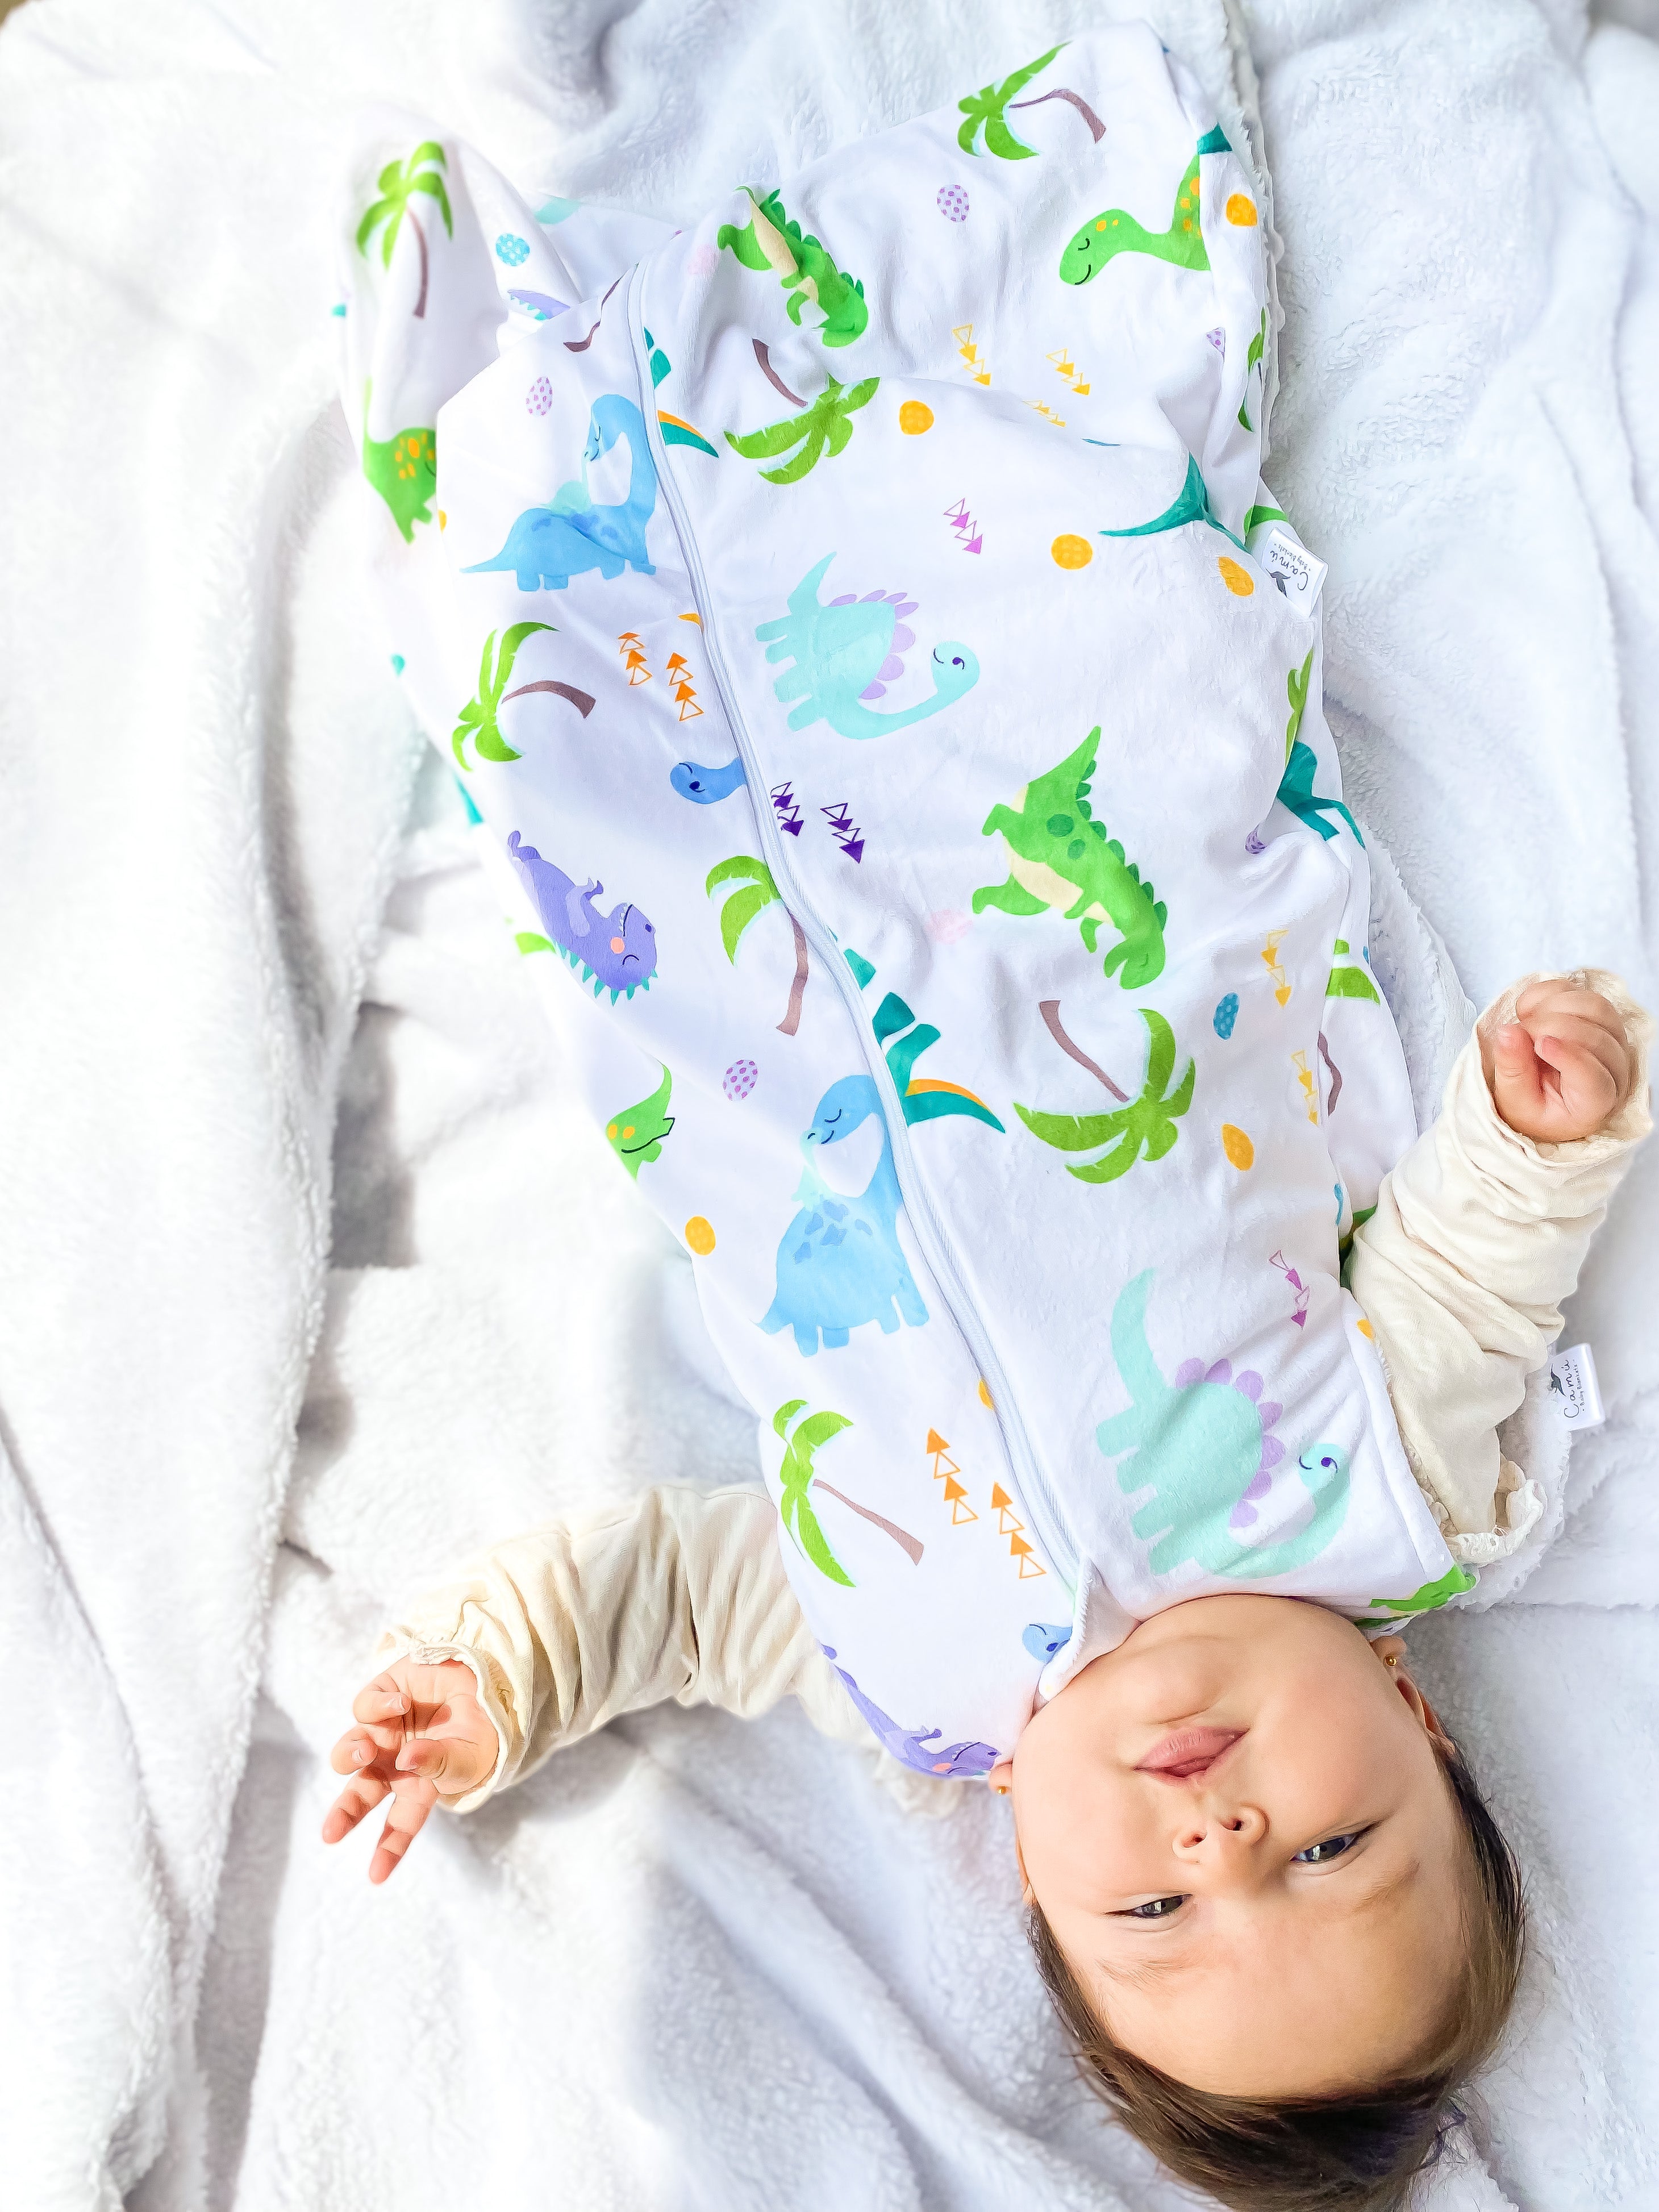 Sleeping bag para Recién Nacido (0-6 meses) - Dinosaurios